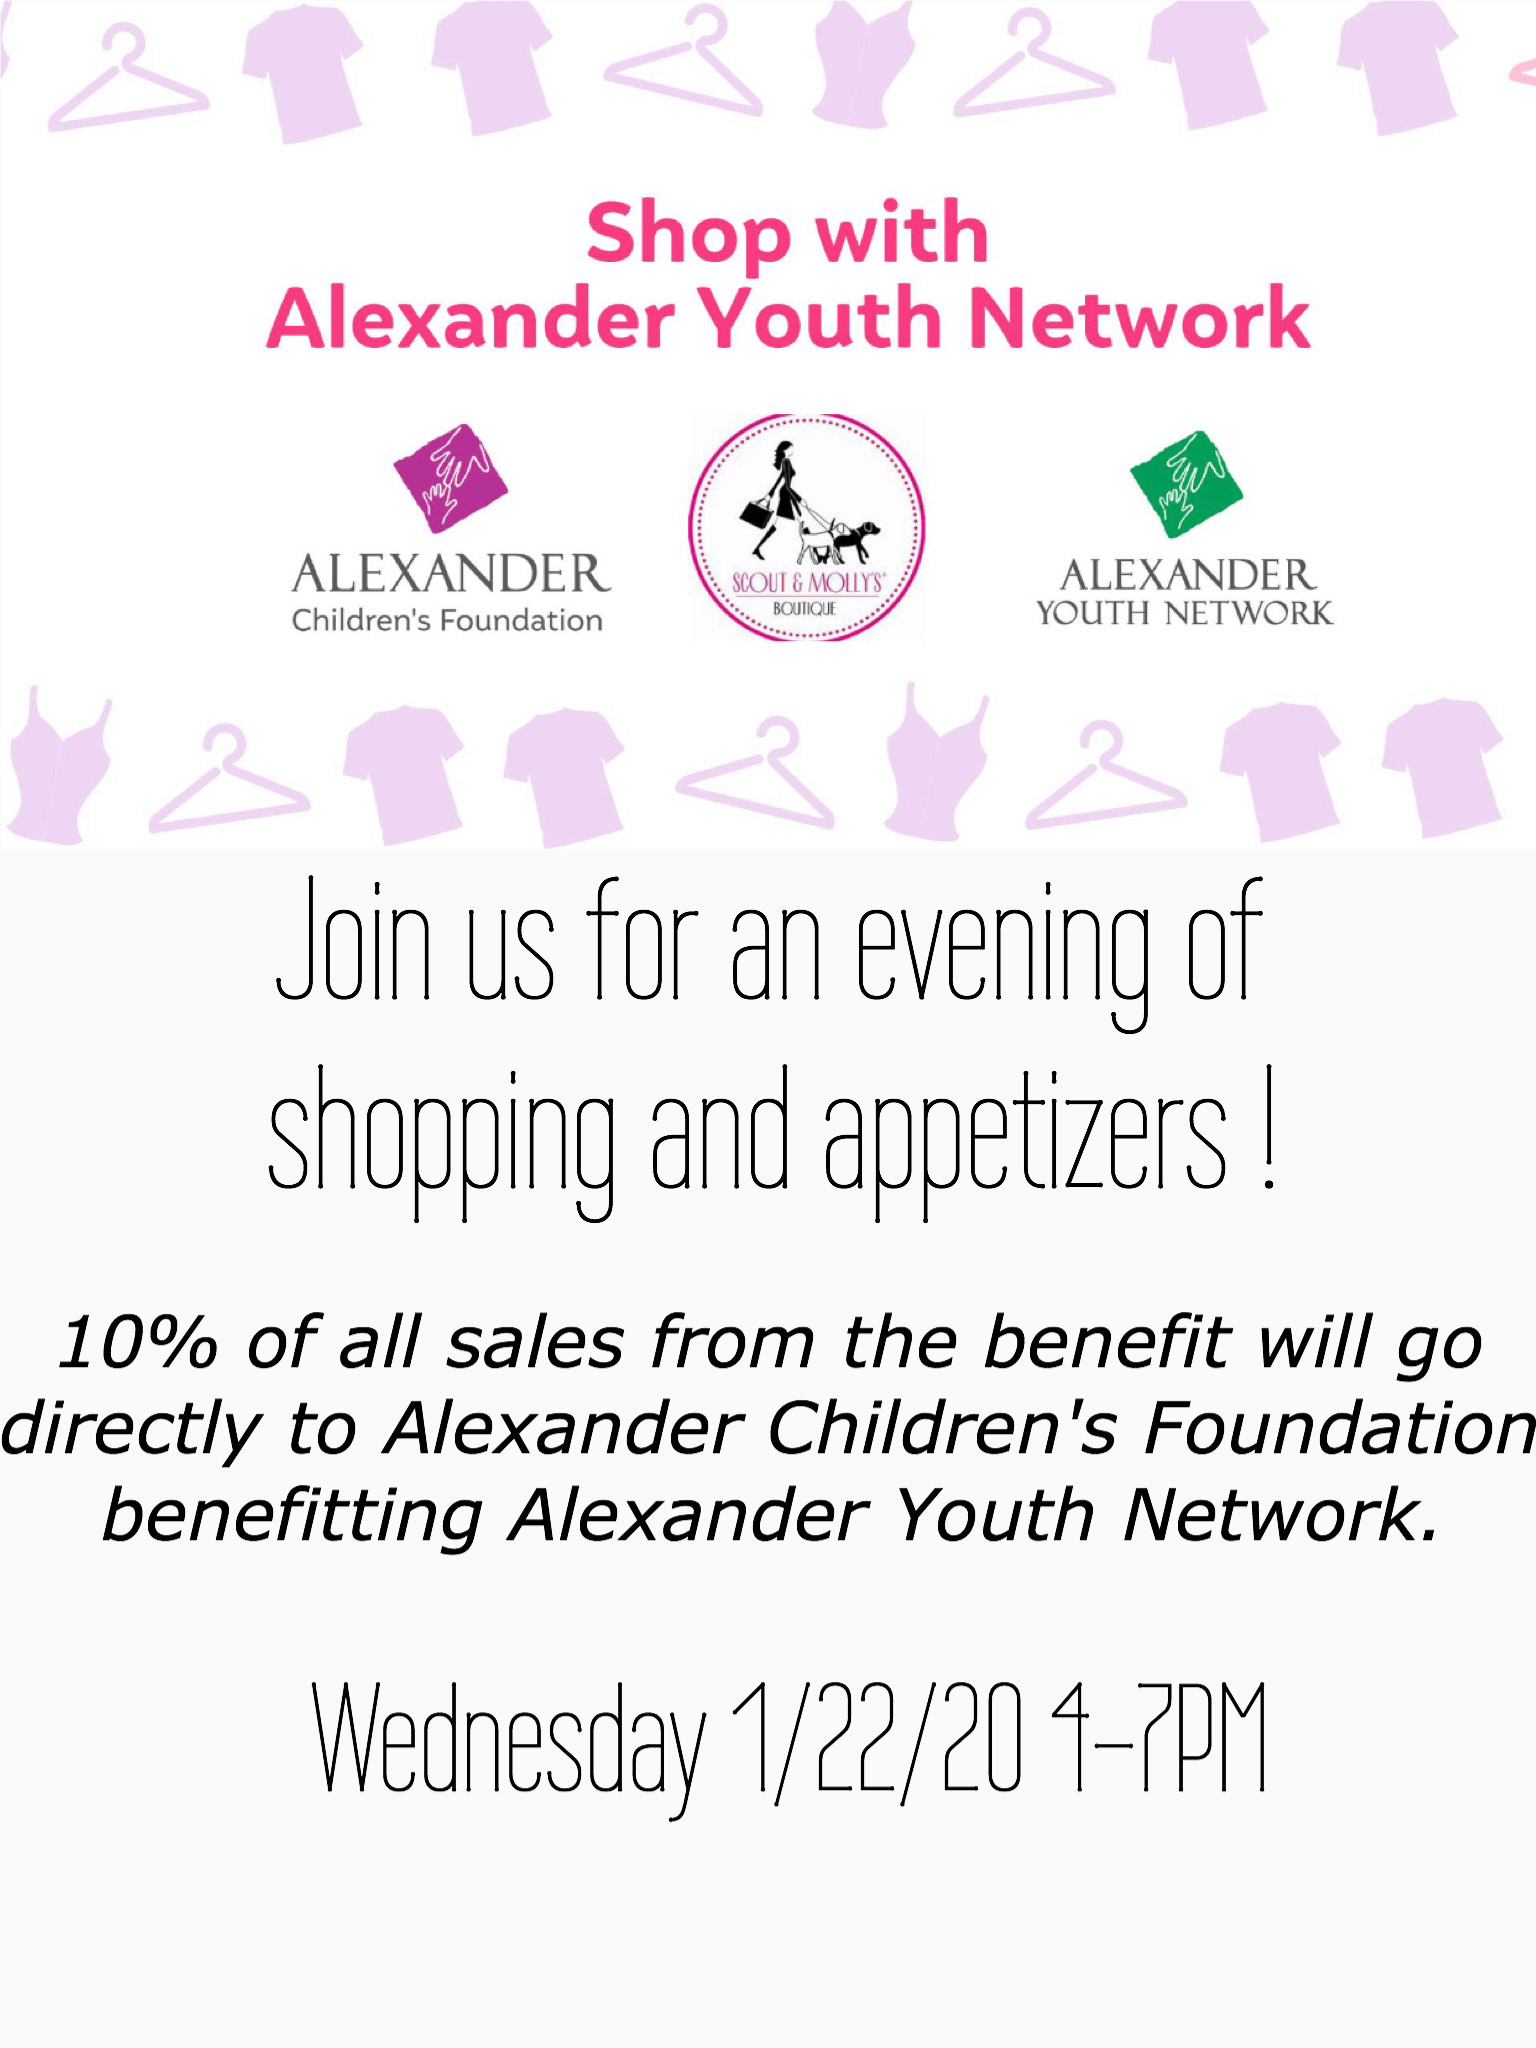 Alexander youth network job openings